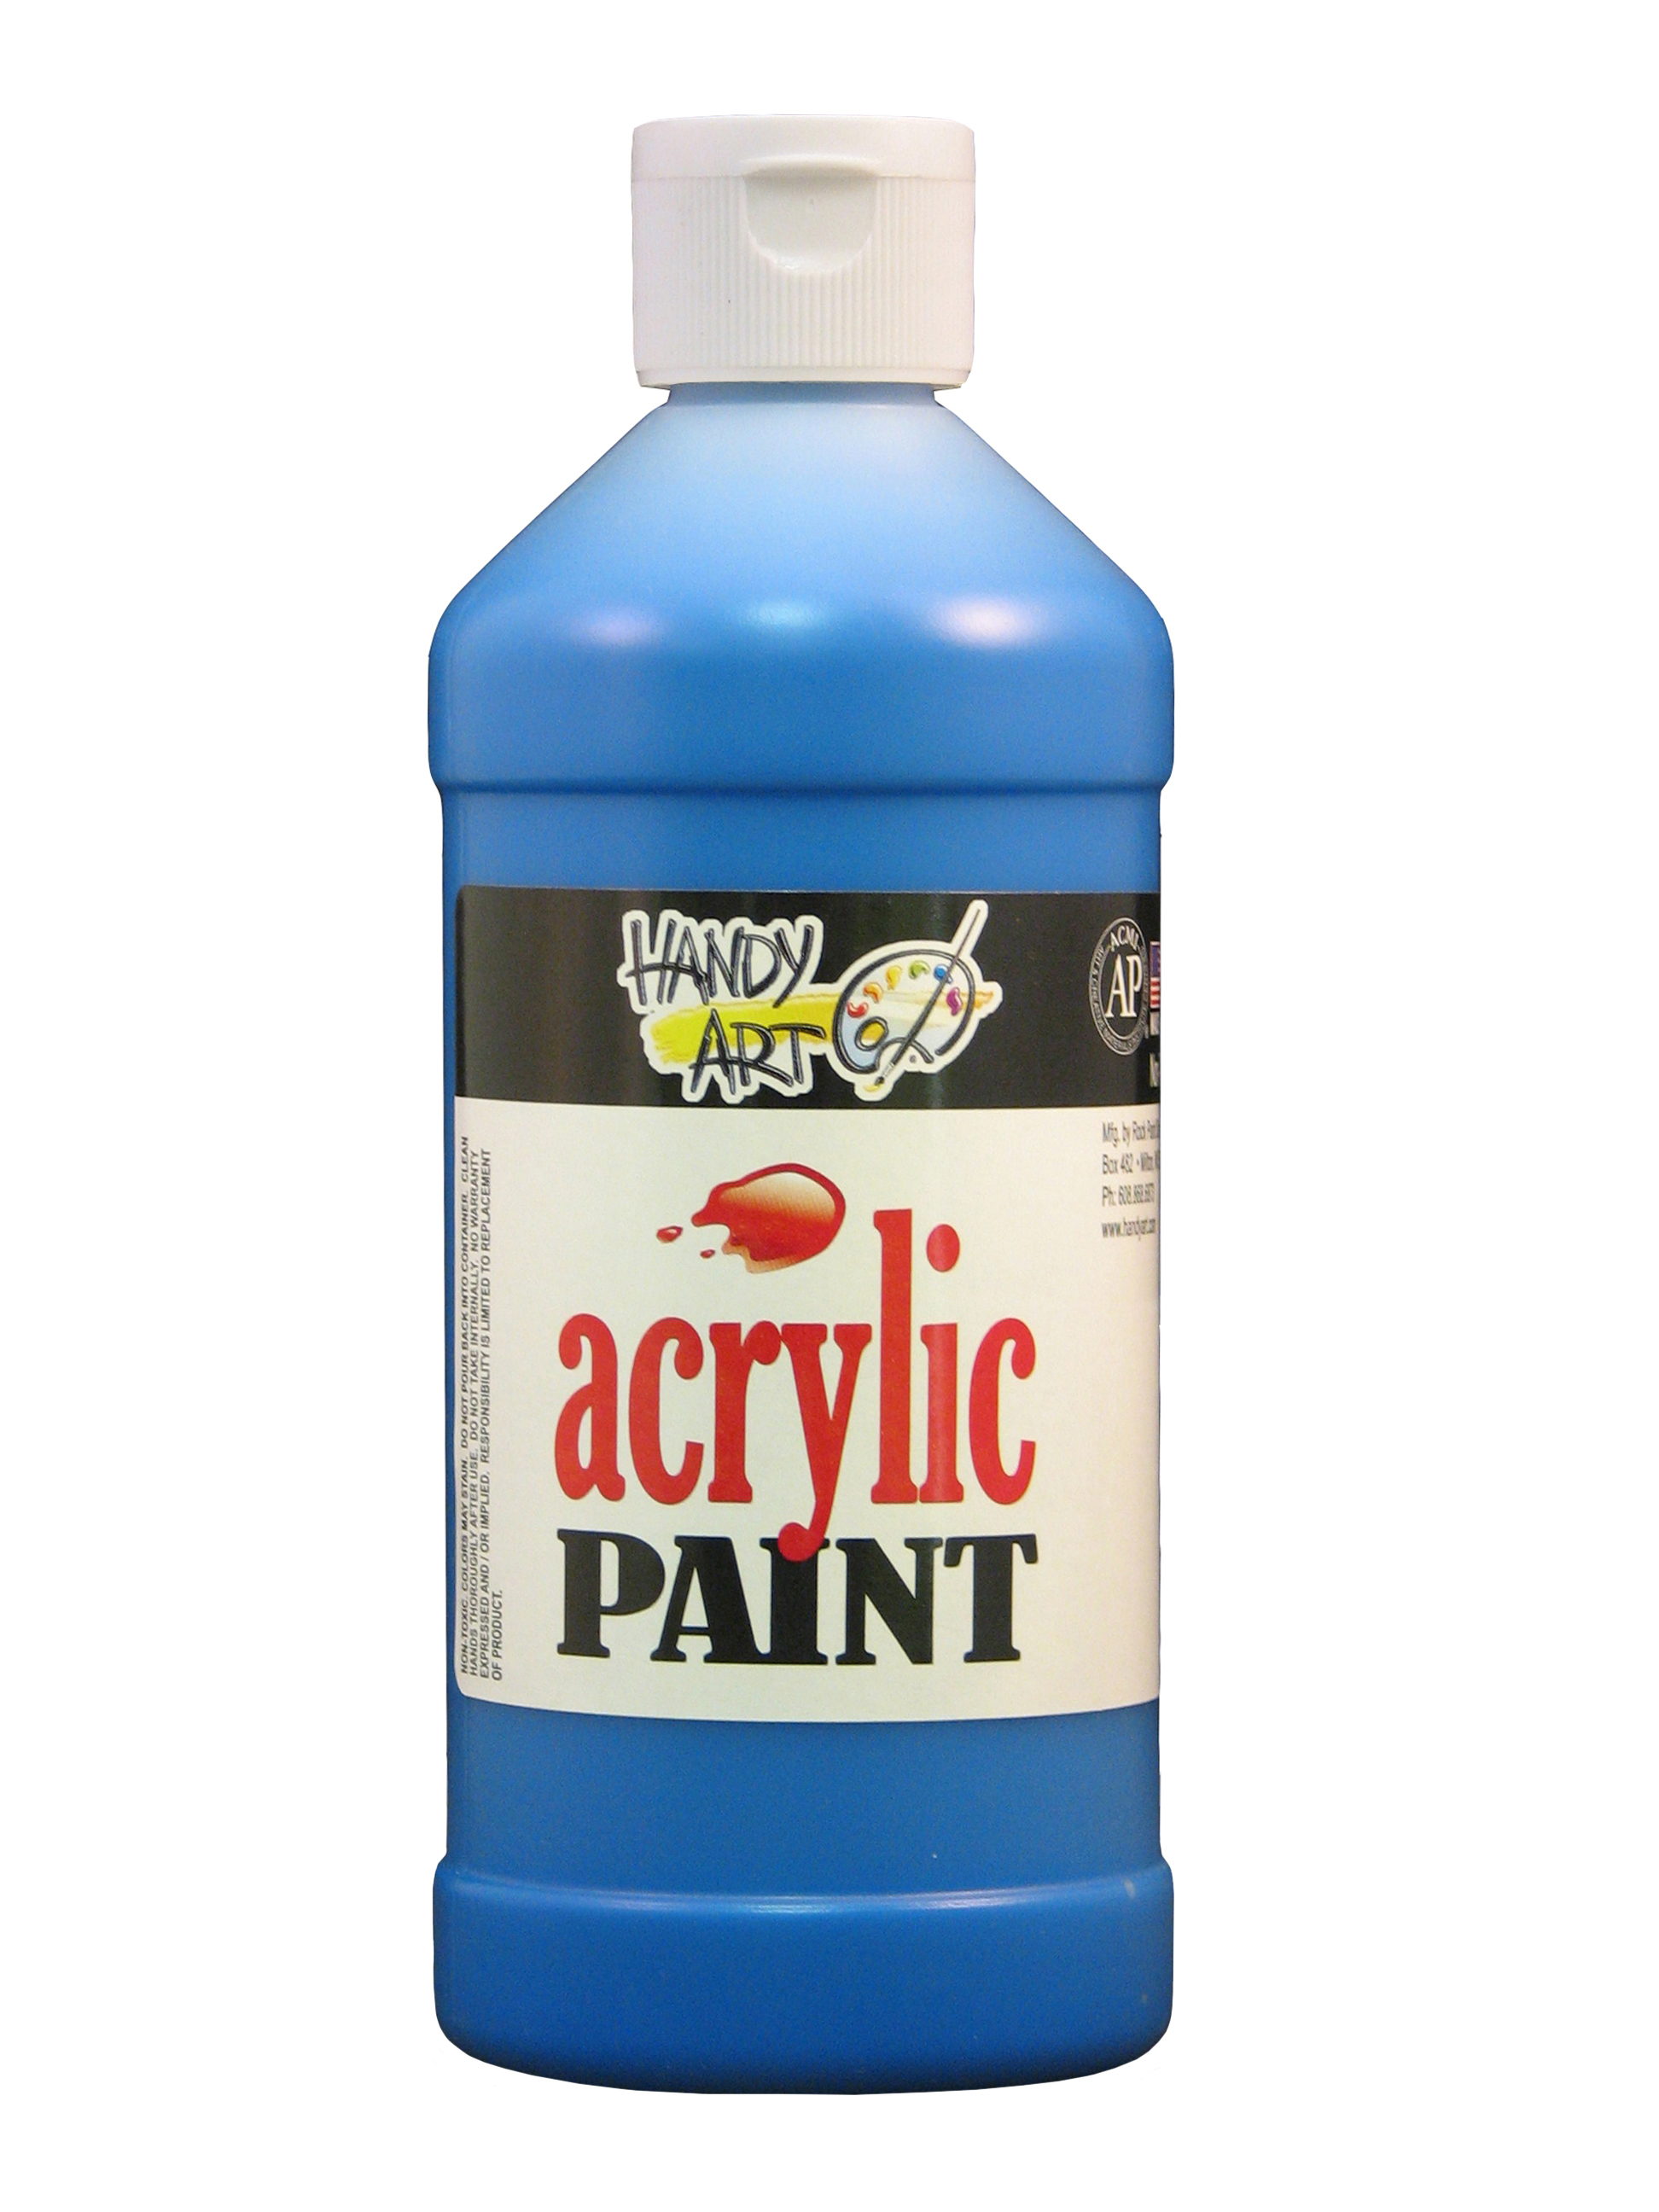 Sargent Art Acrylic Paint - White, 16 oz Bottle